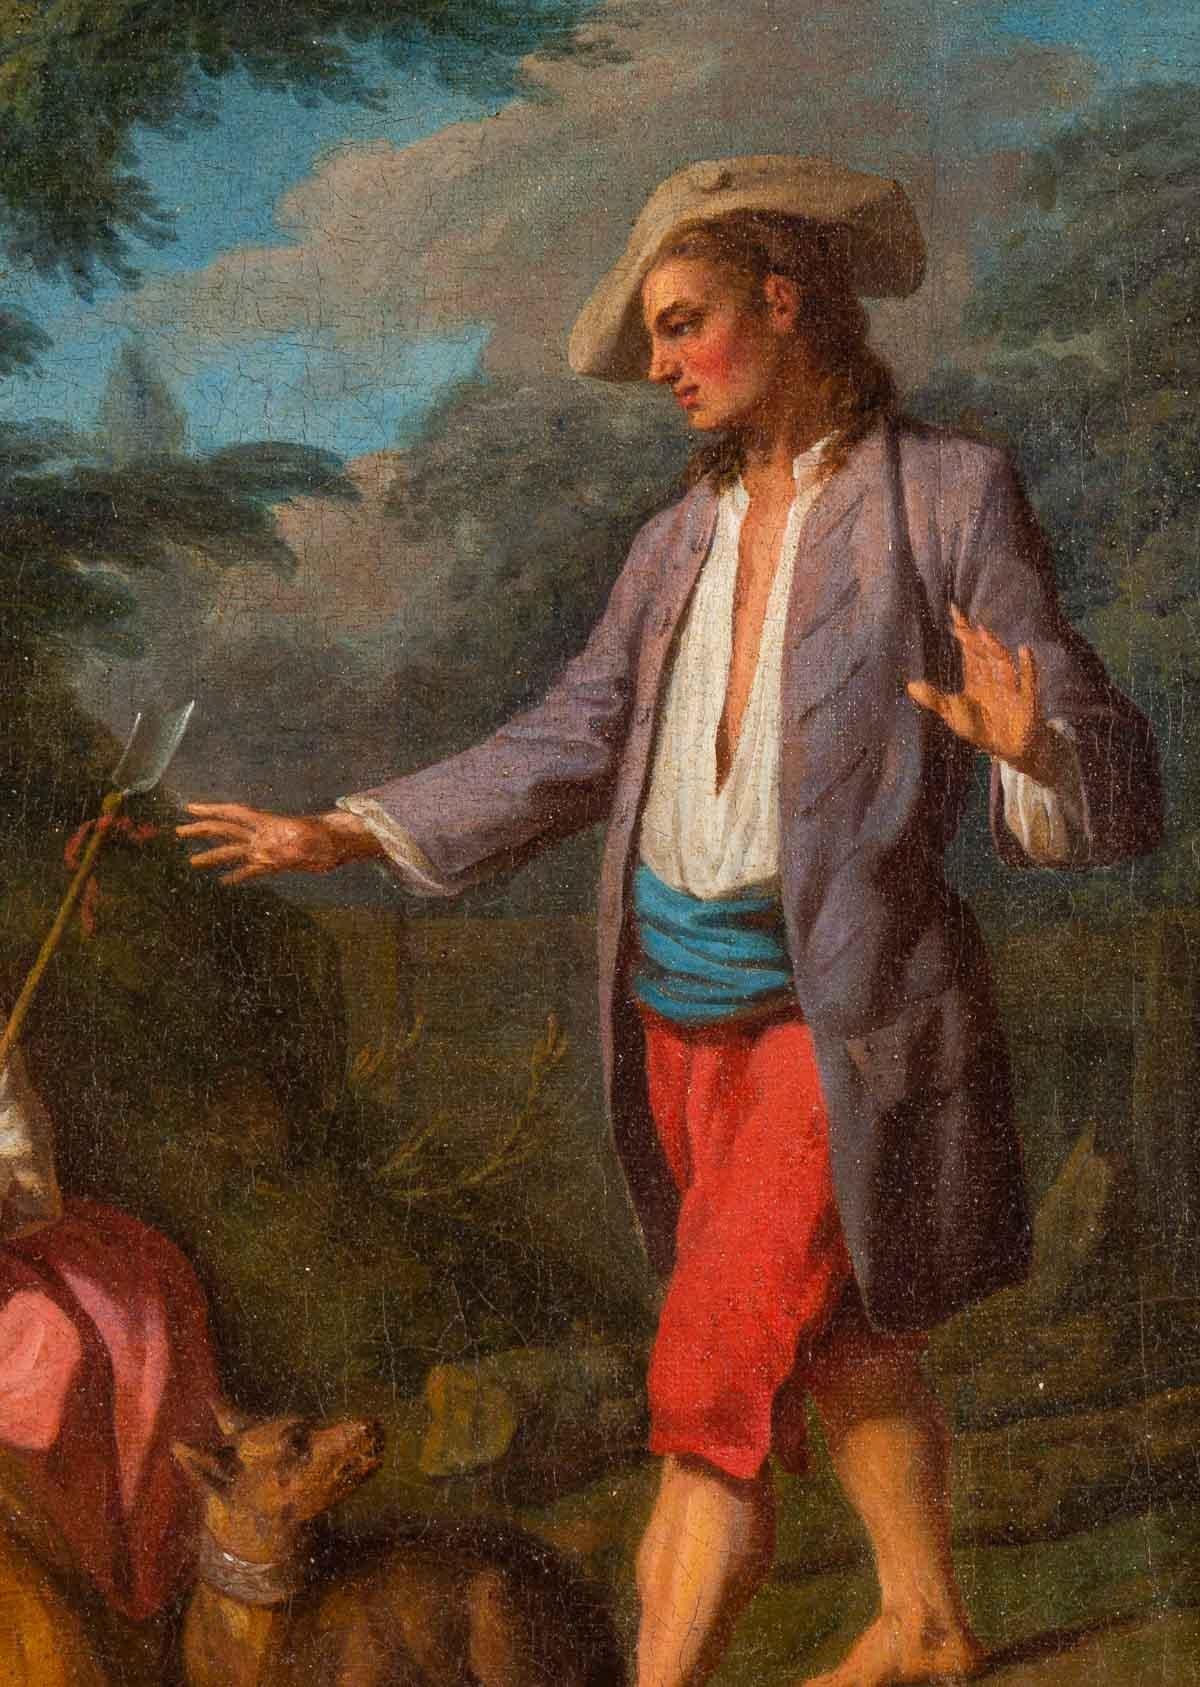 Ein Öl auf Leinwand aus dem 18. Jahrhundert mit einem Rahmen aus Goldholz.
Maße: Gemälde - H: 40 cm, B: 31 cm
Rahmen - H: 58 cm, B: 49 cm, T: 5 cm.